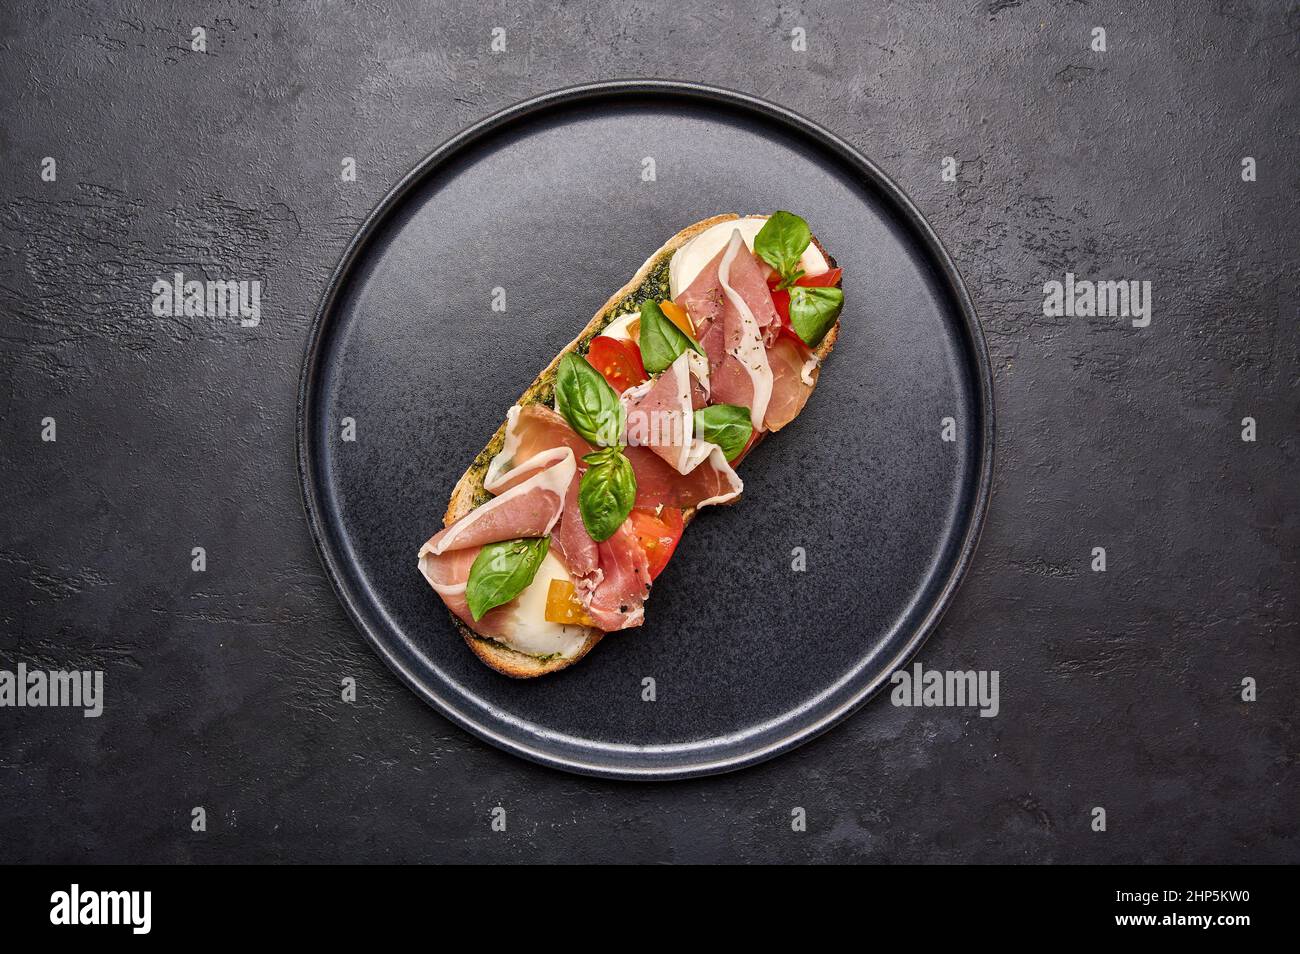 Top view bruschetta with mozzarella, Parma ham and pesto on black plate on graphite background Stock Photo